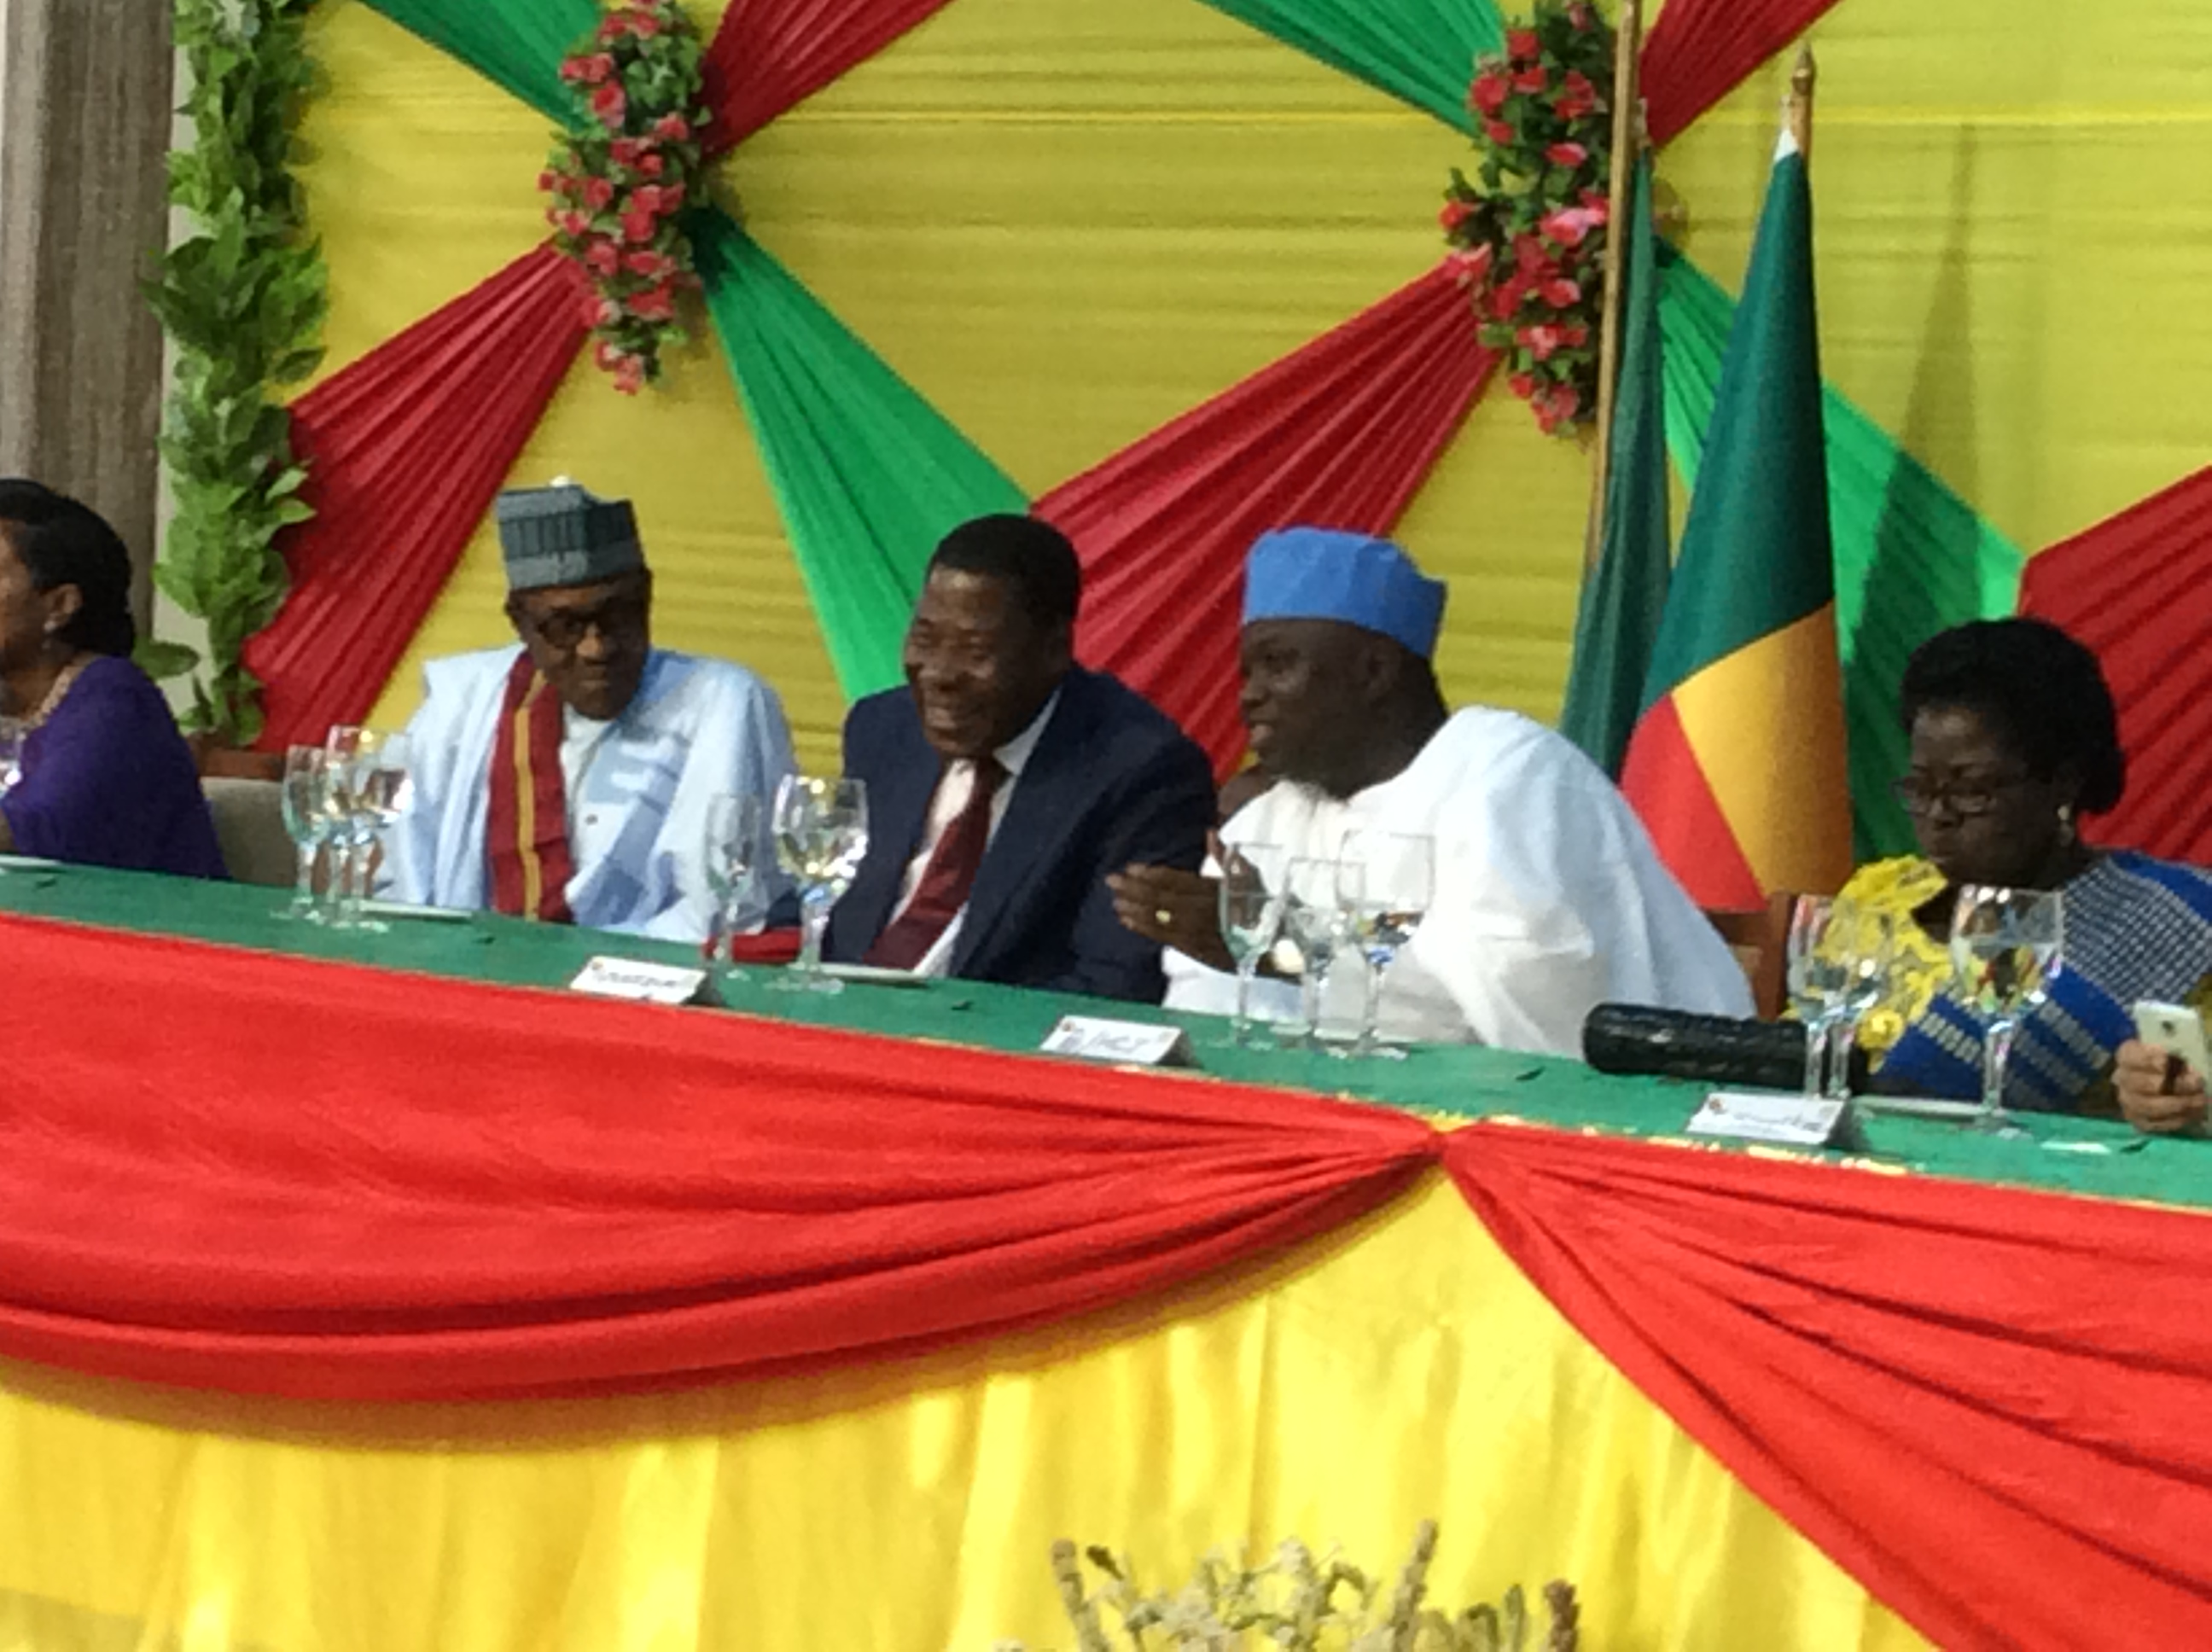 Governor Ambode's Visit to Benin Republic with President Buhari